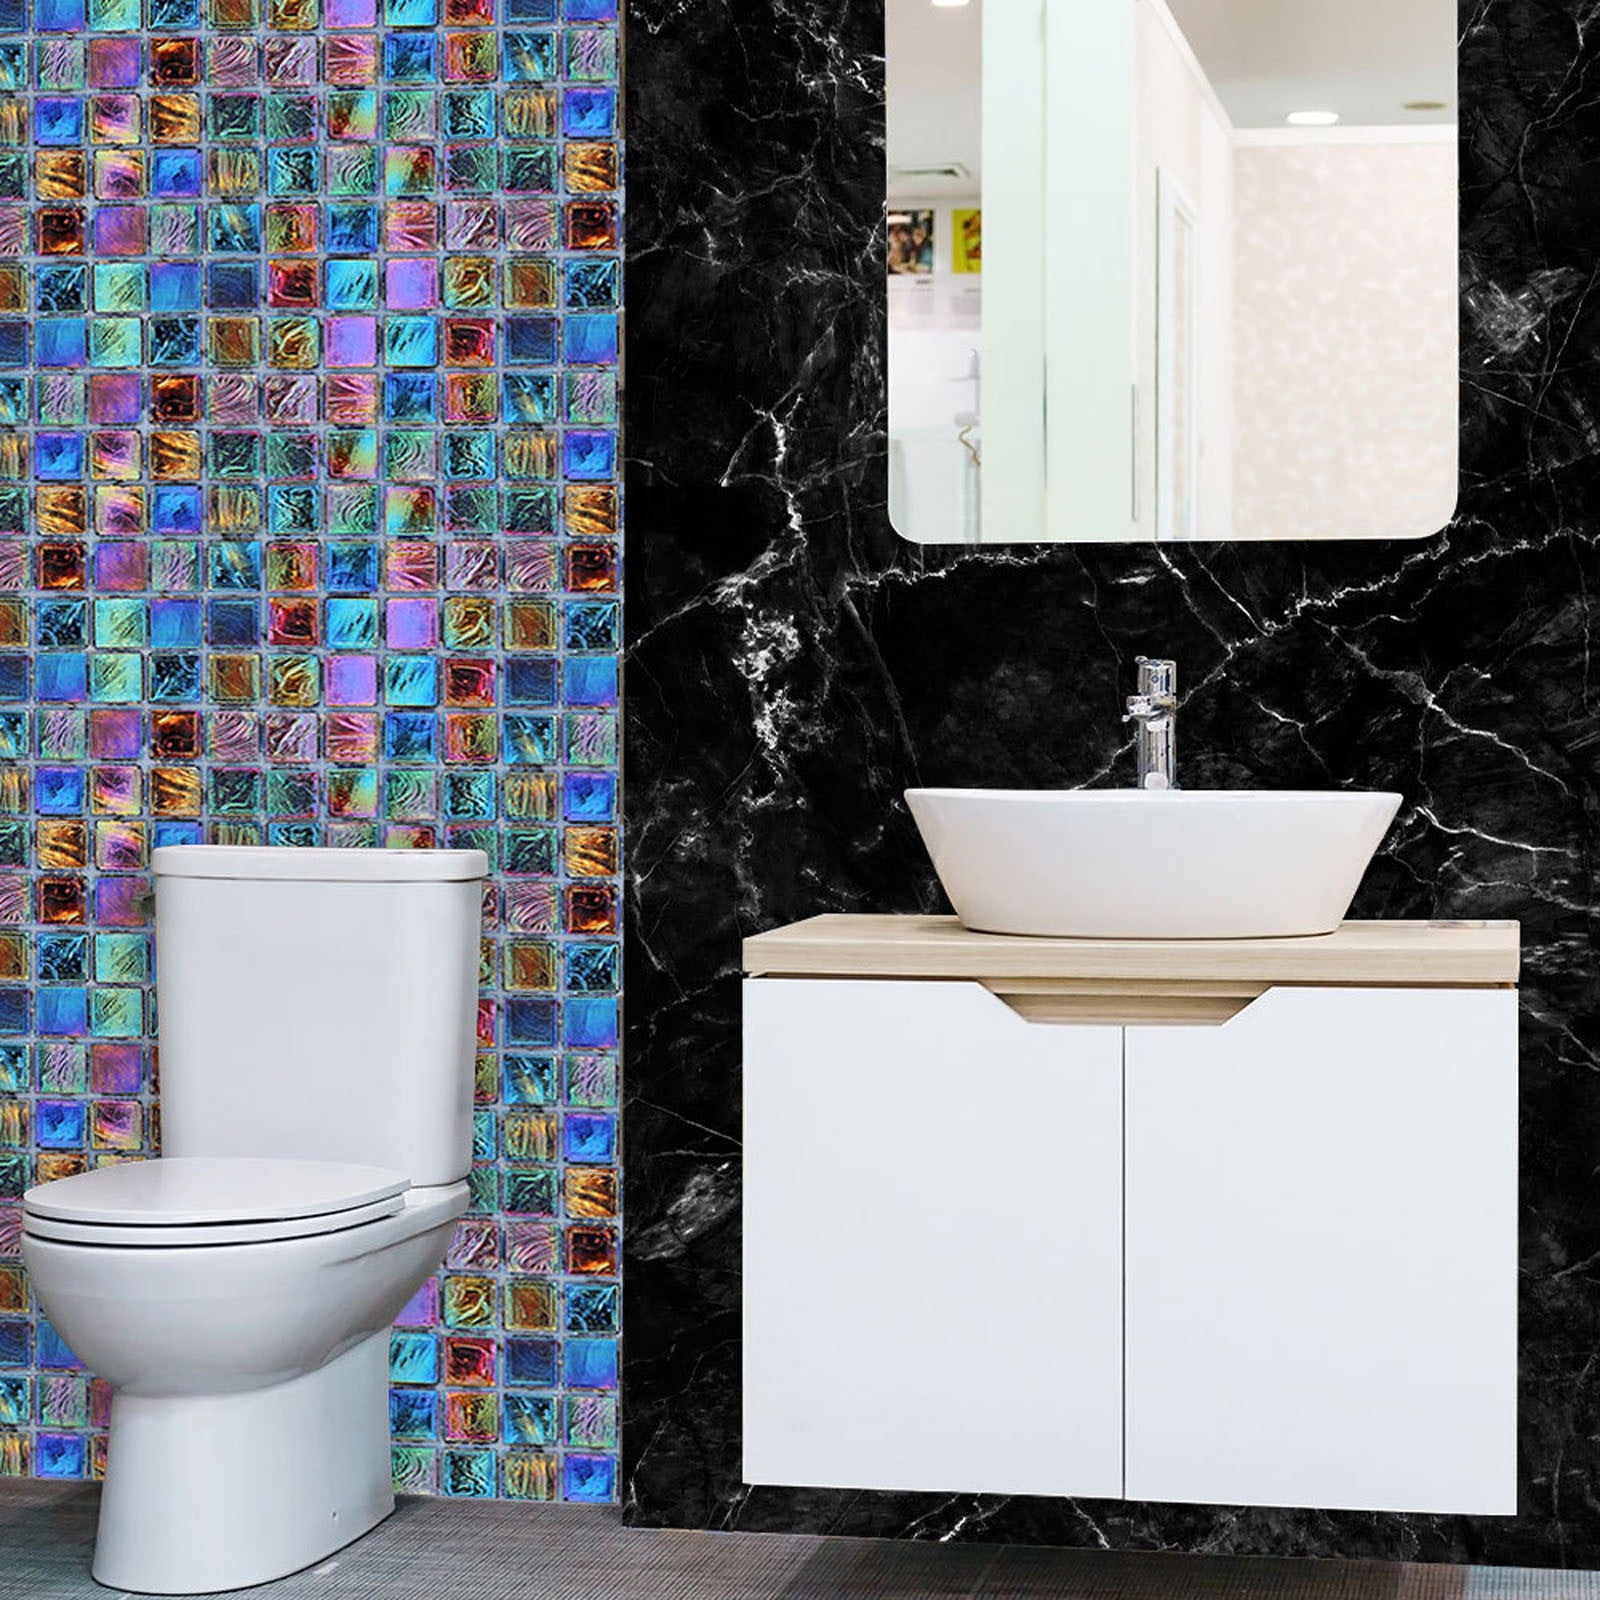 10/19pc Waterproof Tiles Mosaic Wall Sticker Kitchen Bath Adhesive Decor 10x10cm